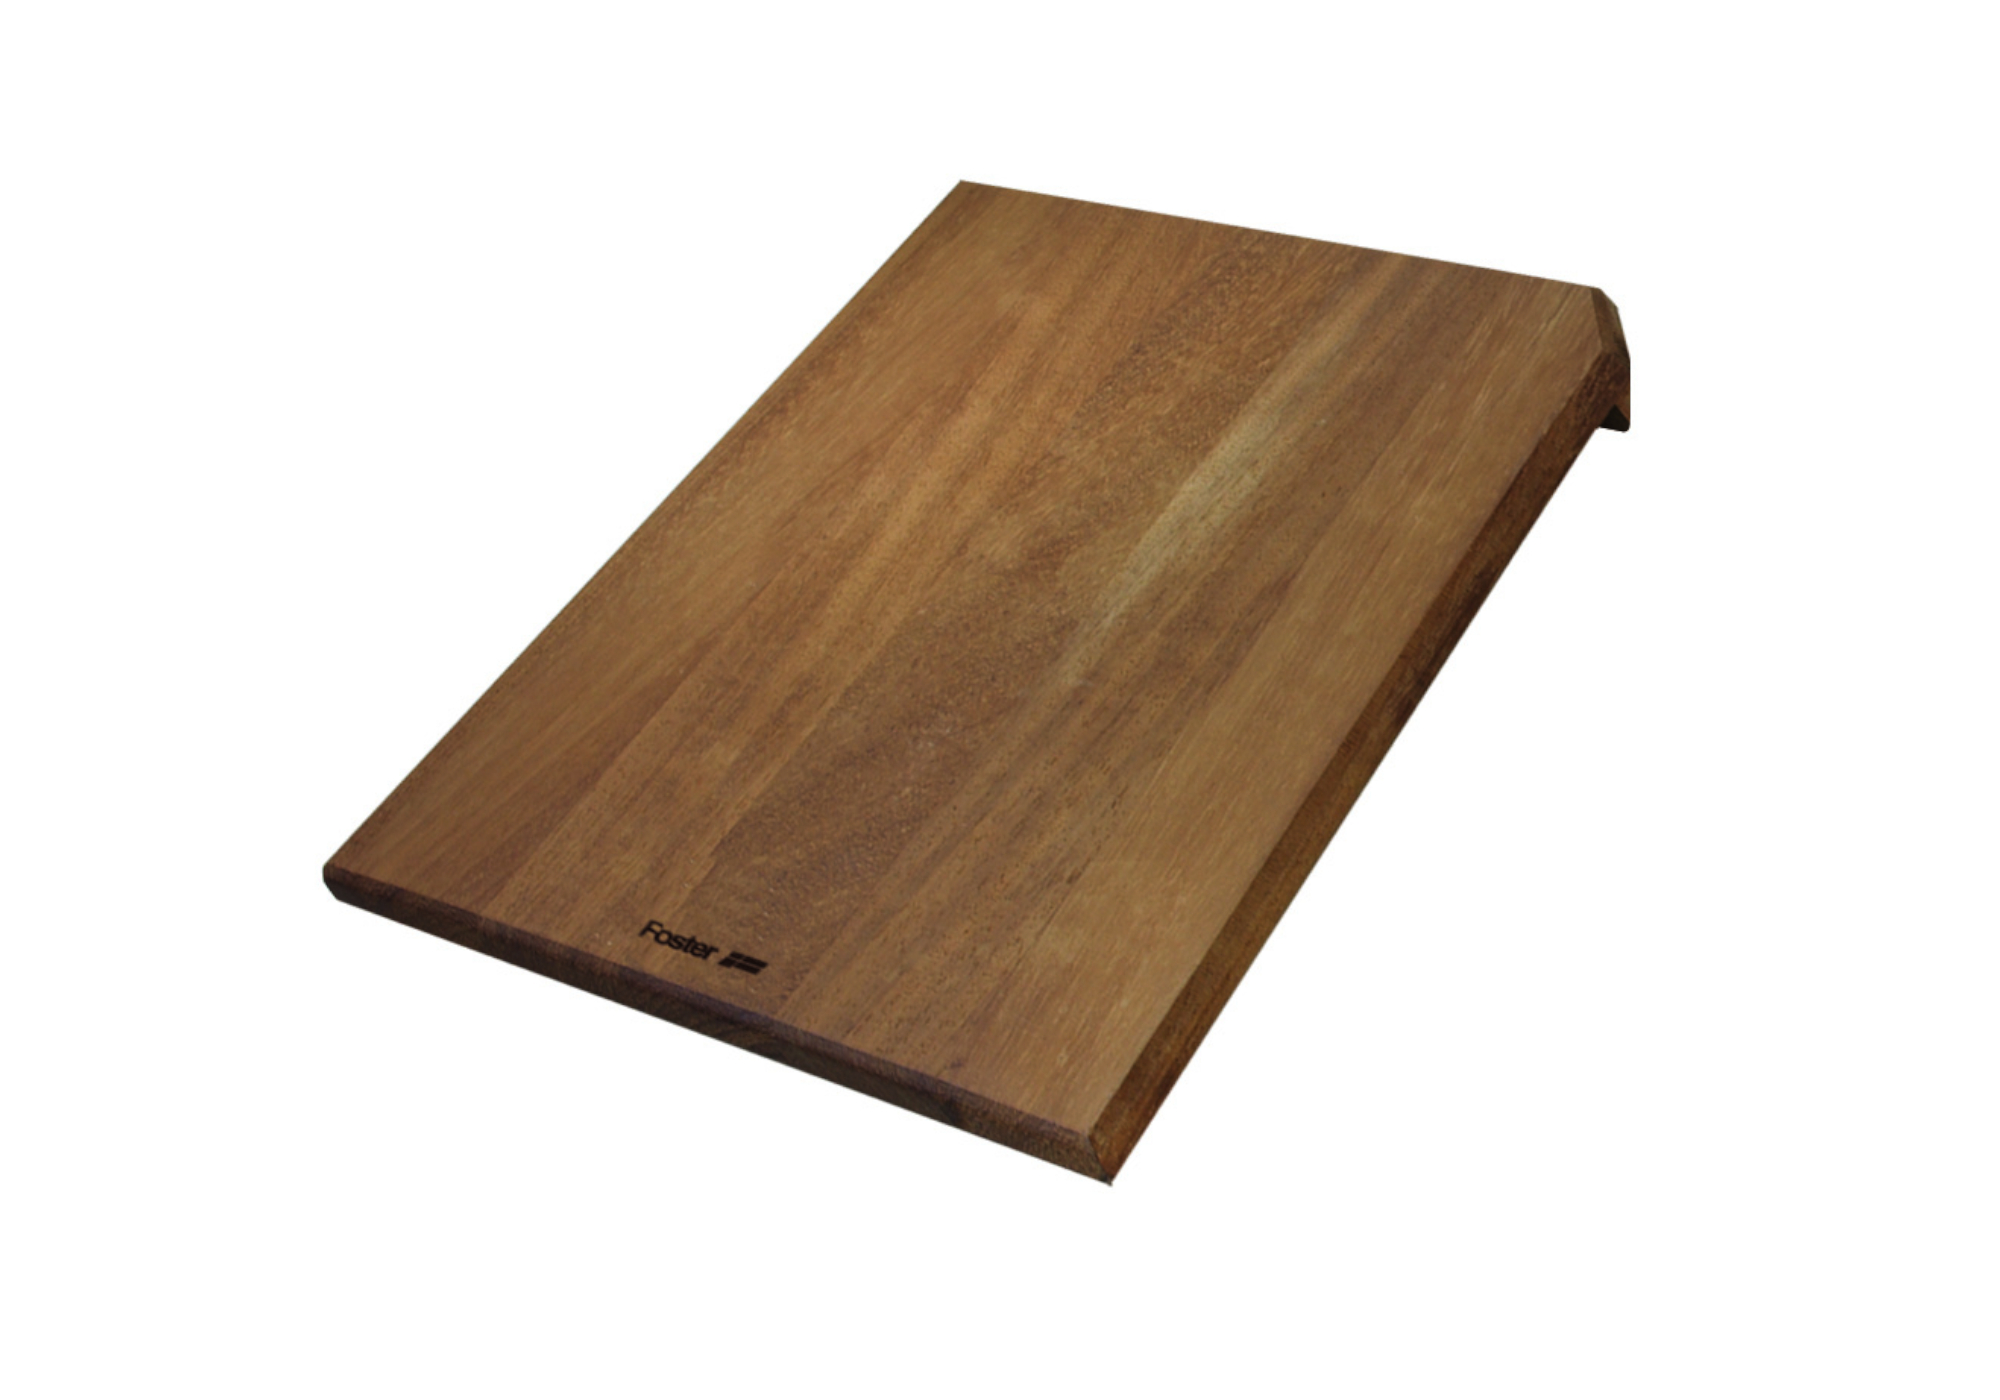 Iroko-wood sliding chopping board